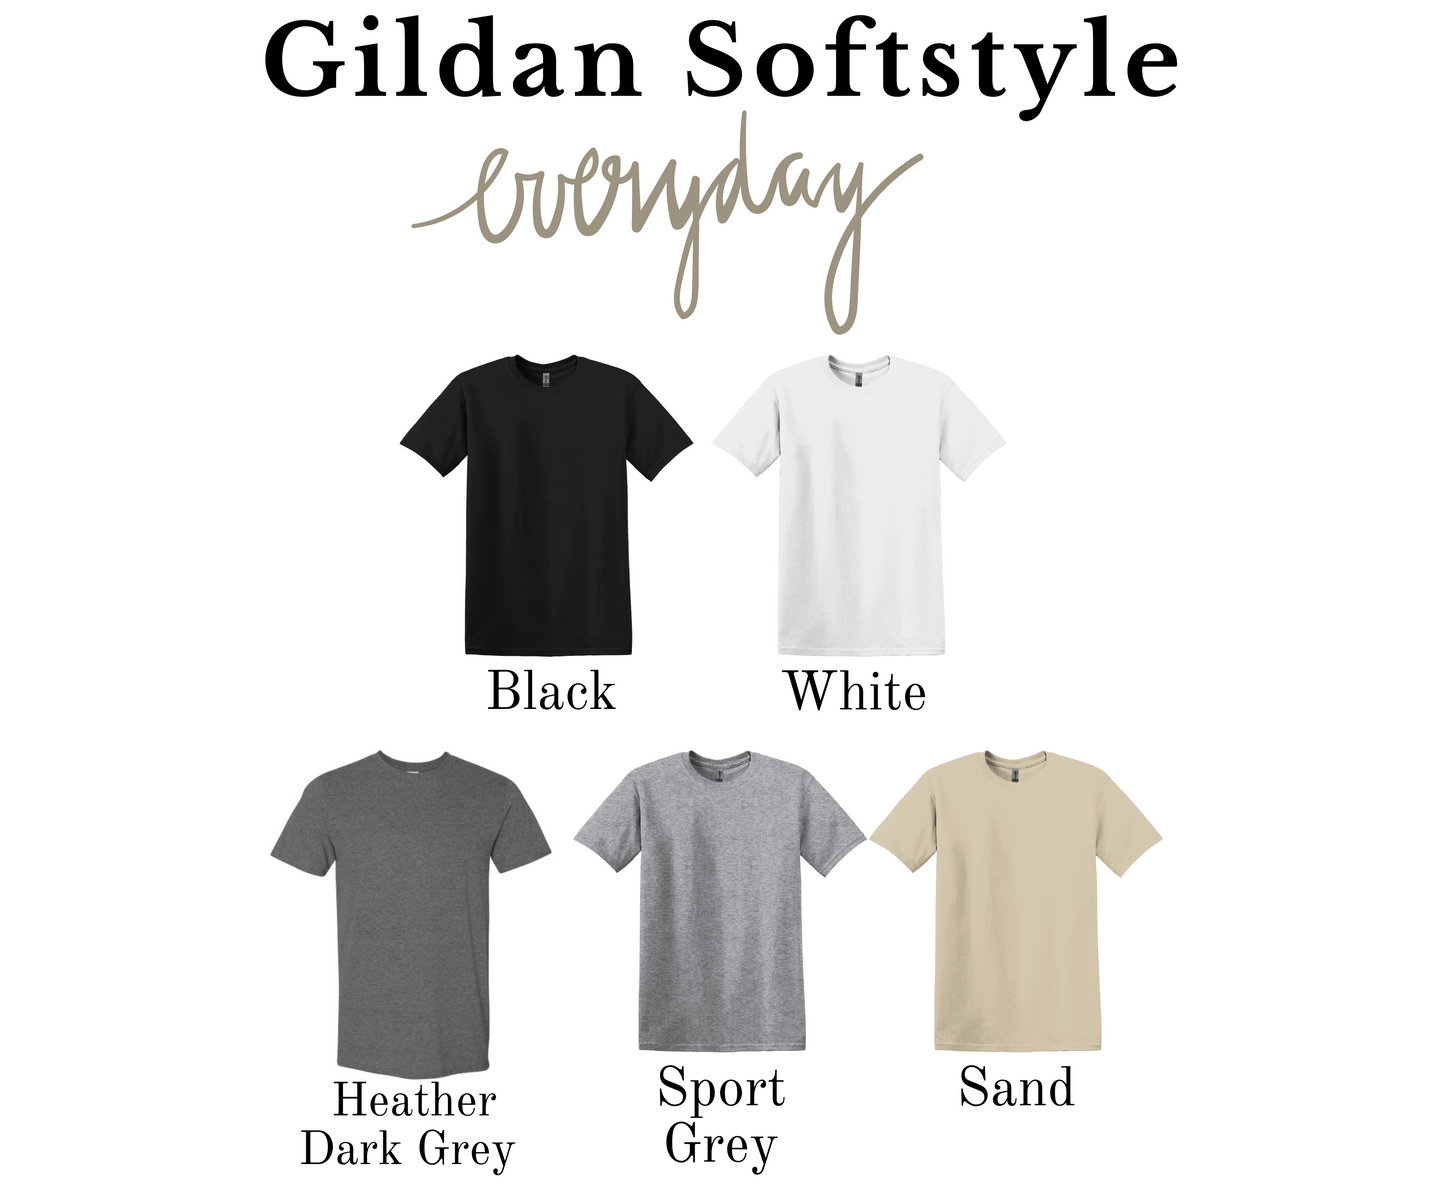 Baseball Tyopgraphy Gildan Softstyle Crewneck or Tshirt